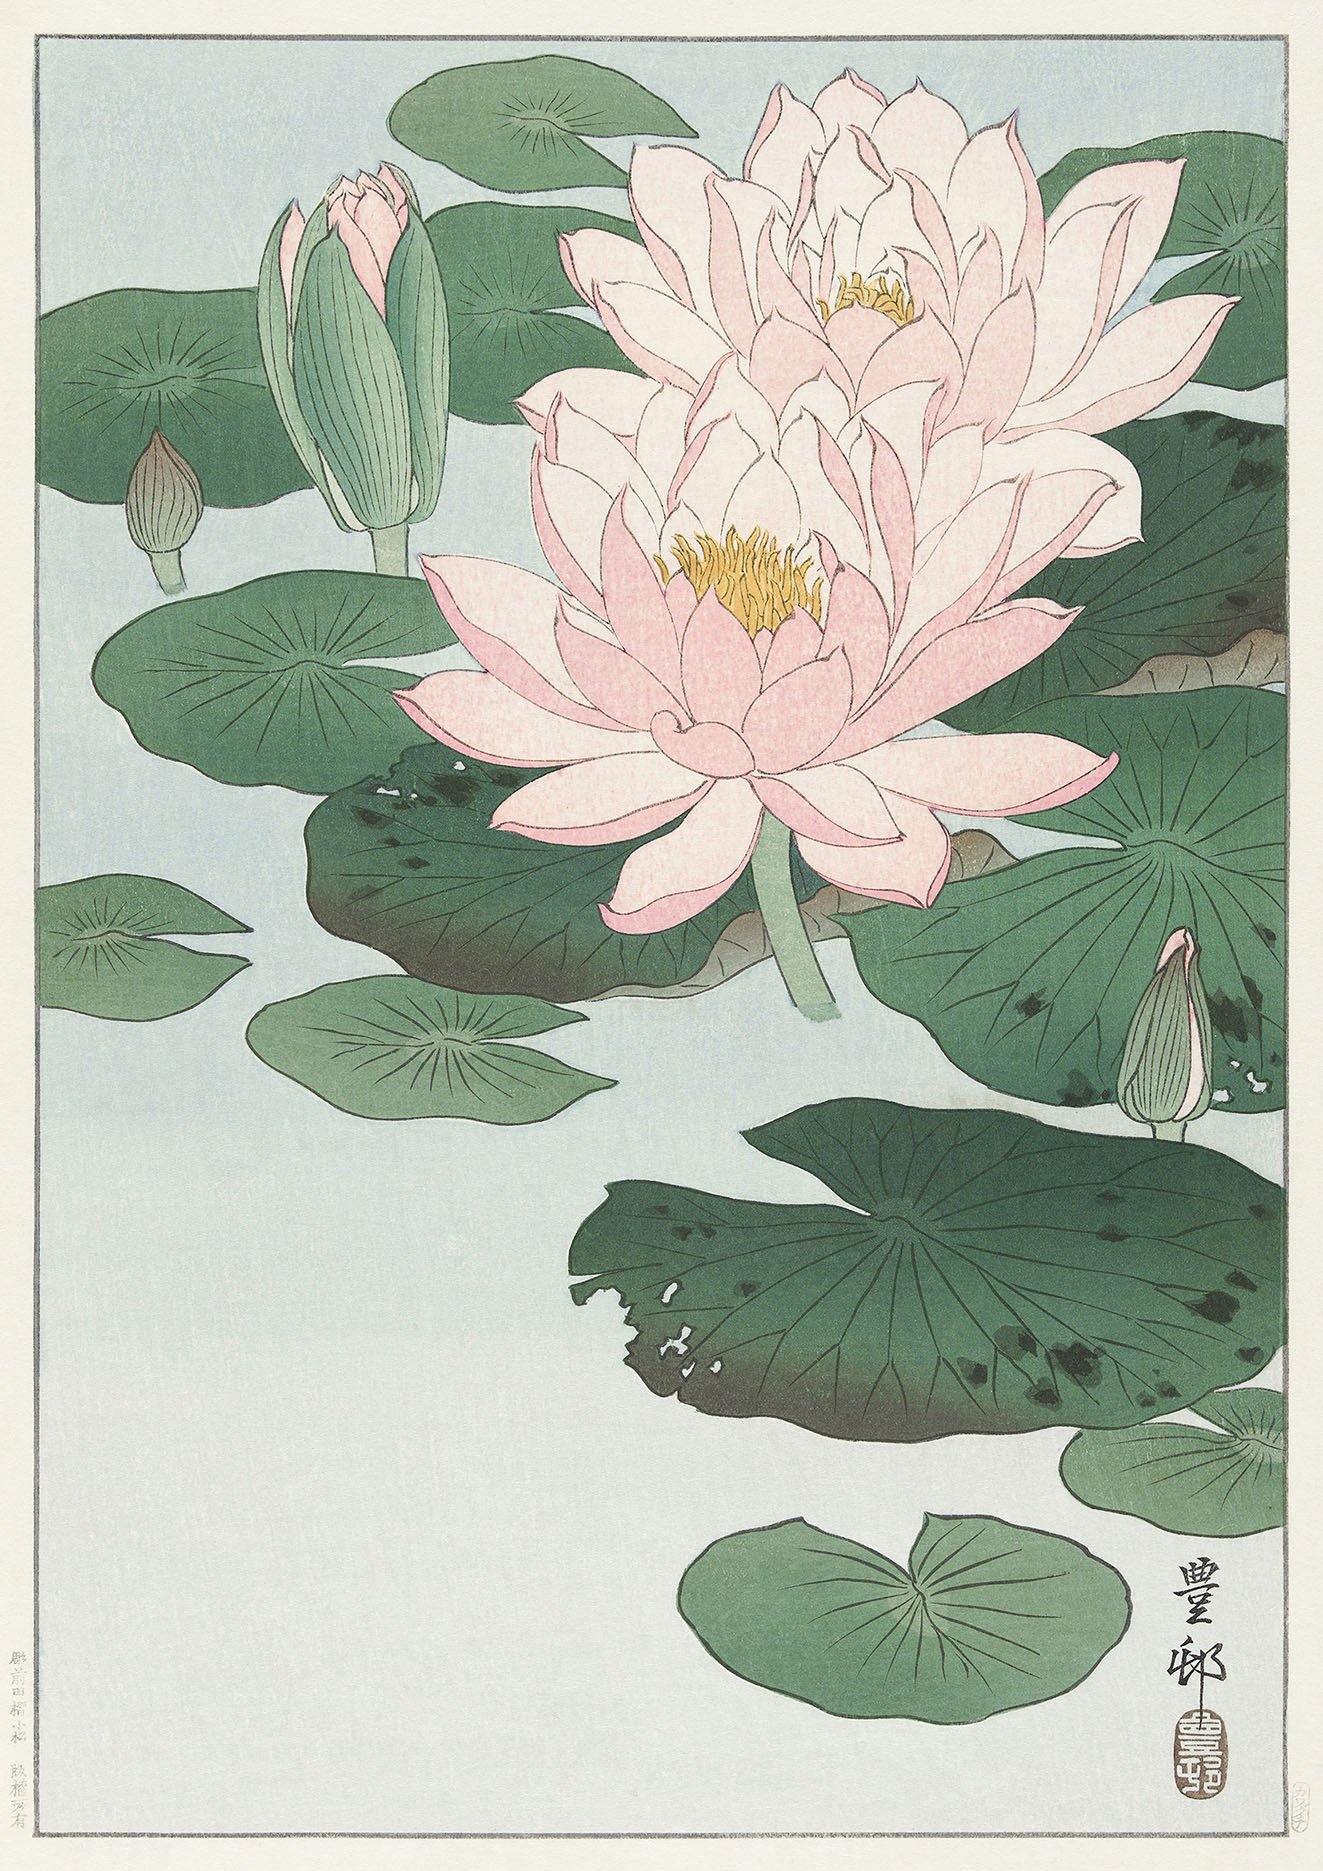 LILY AND LOTUS PRINTS: Japanese Artworks by Ohara Koson - Pimlico Prints